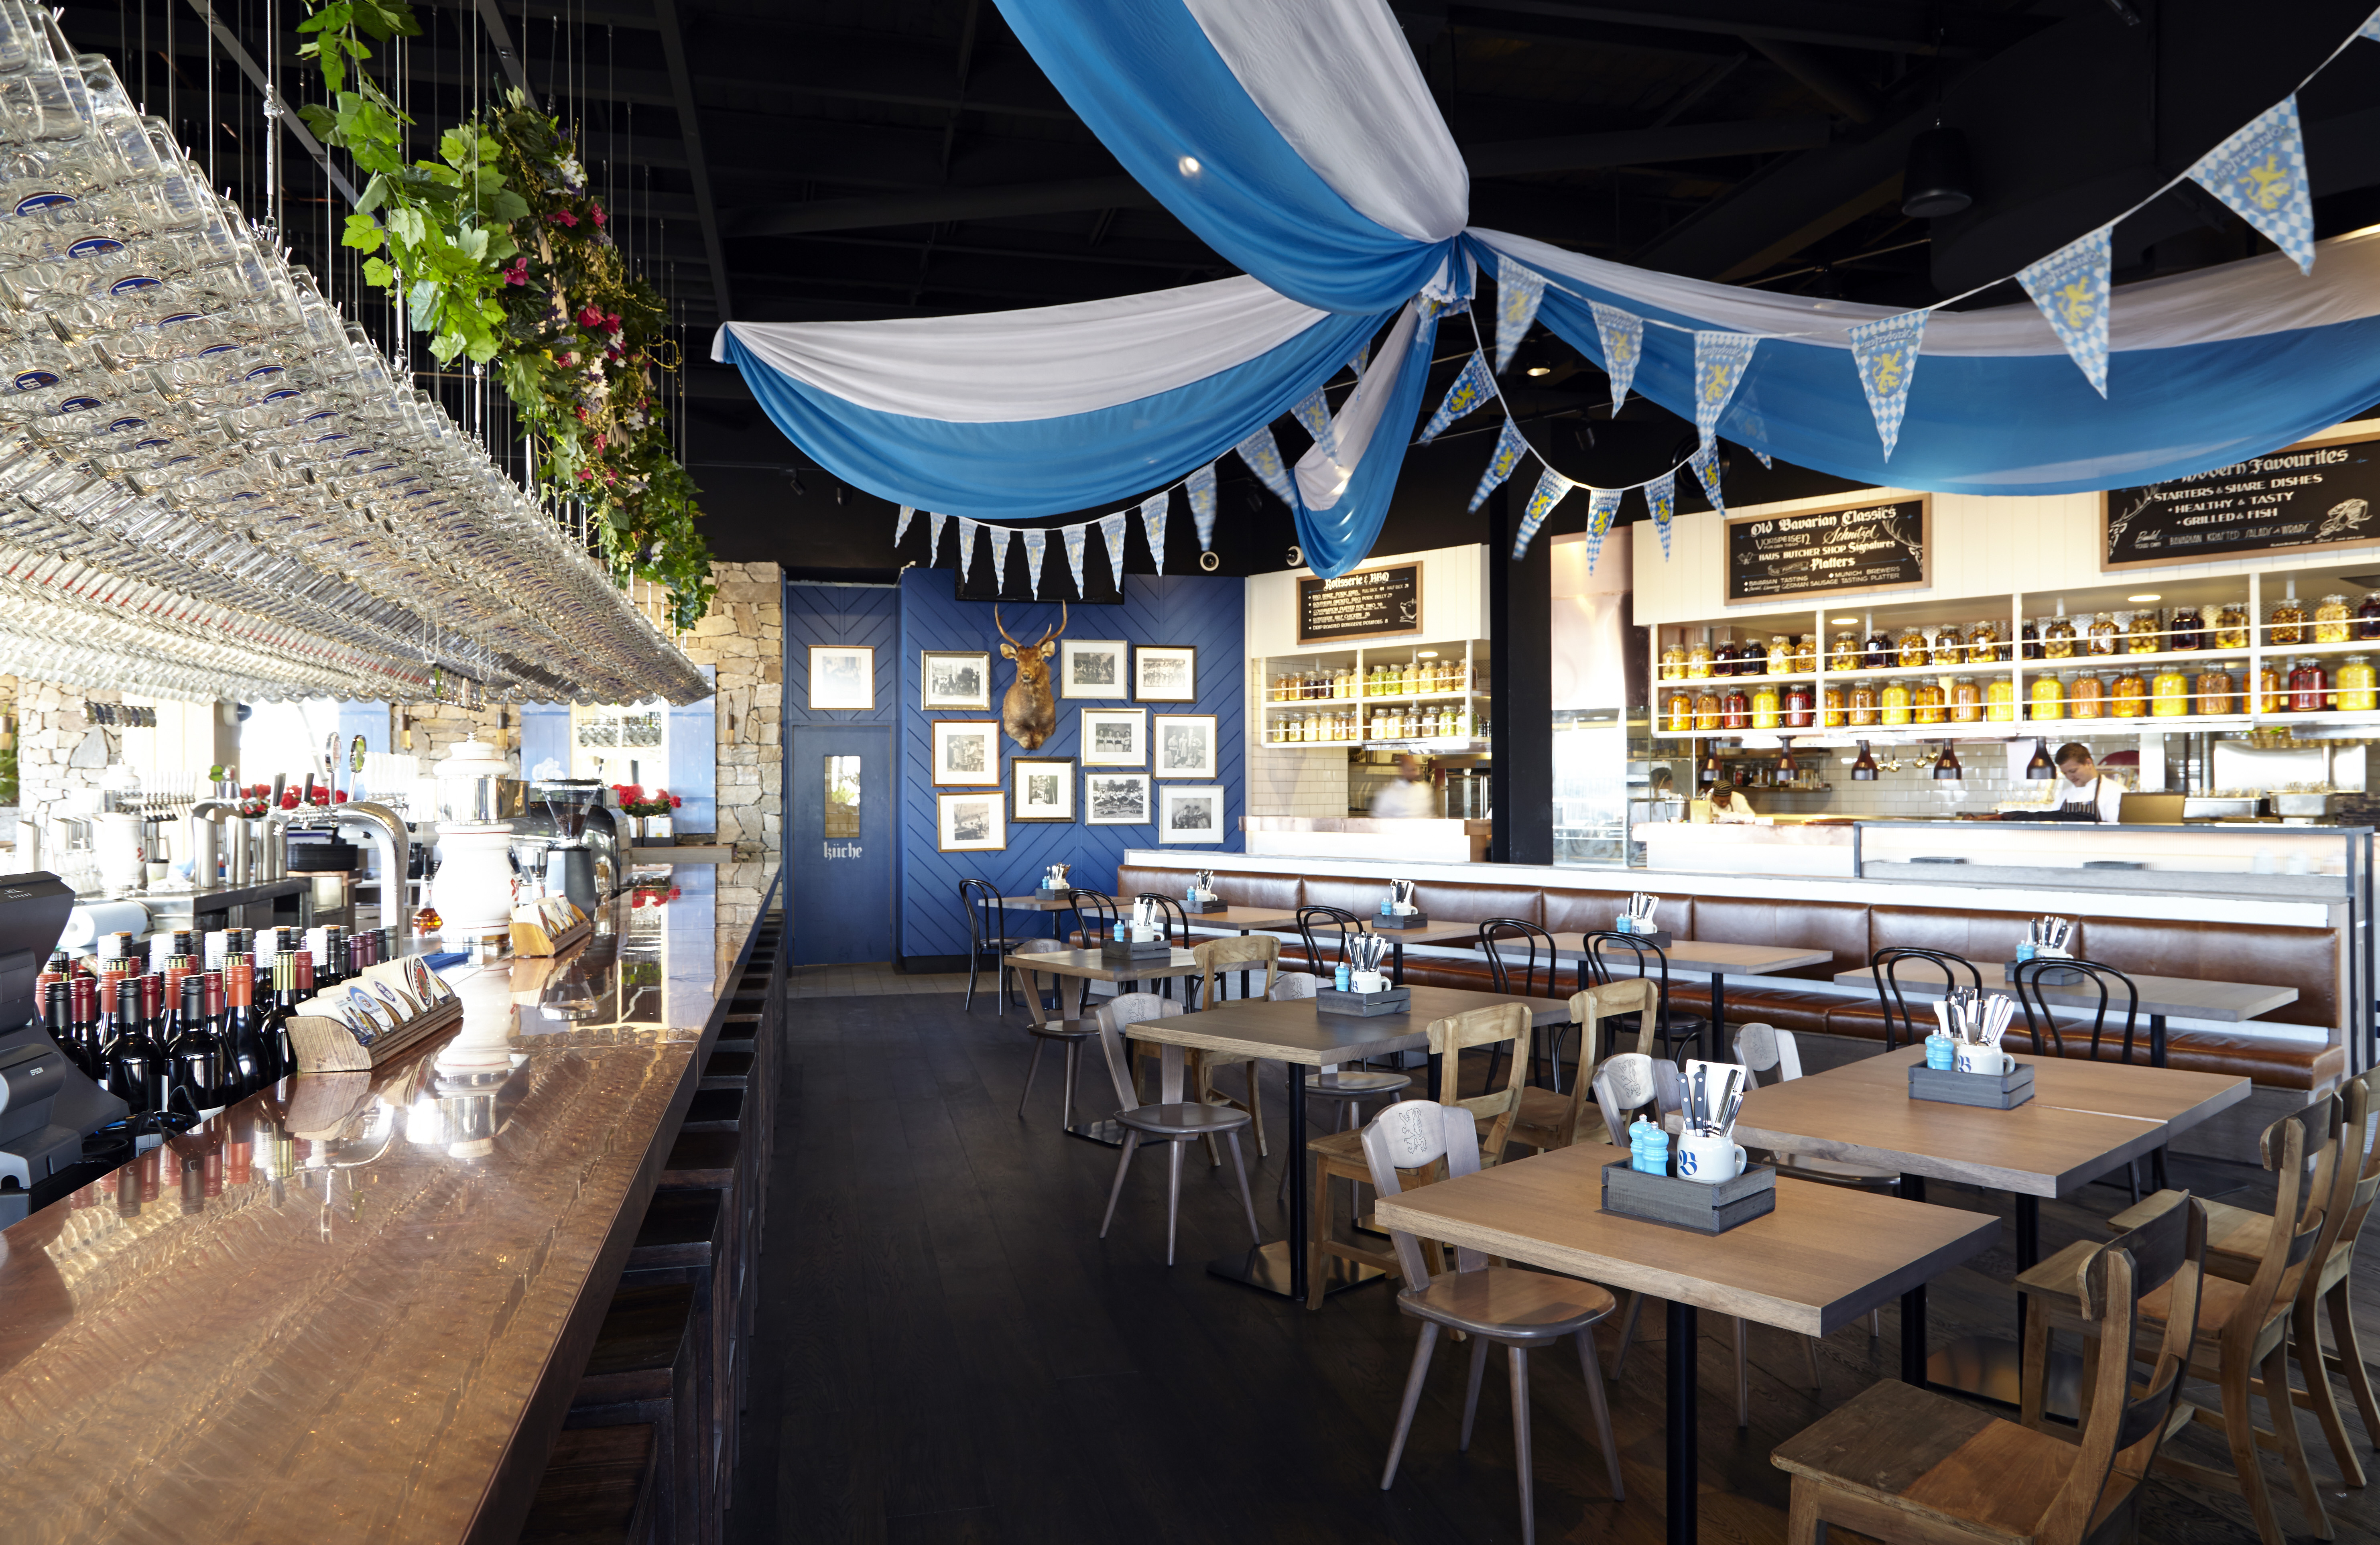 Bavarian Bier Cafe at Westfield Miranda in Sydney - picture by Jane Kelly